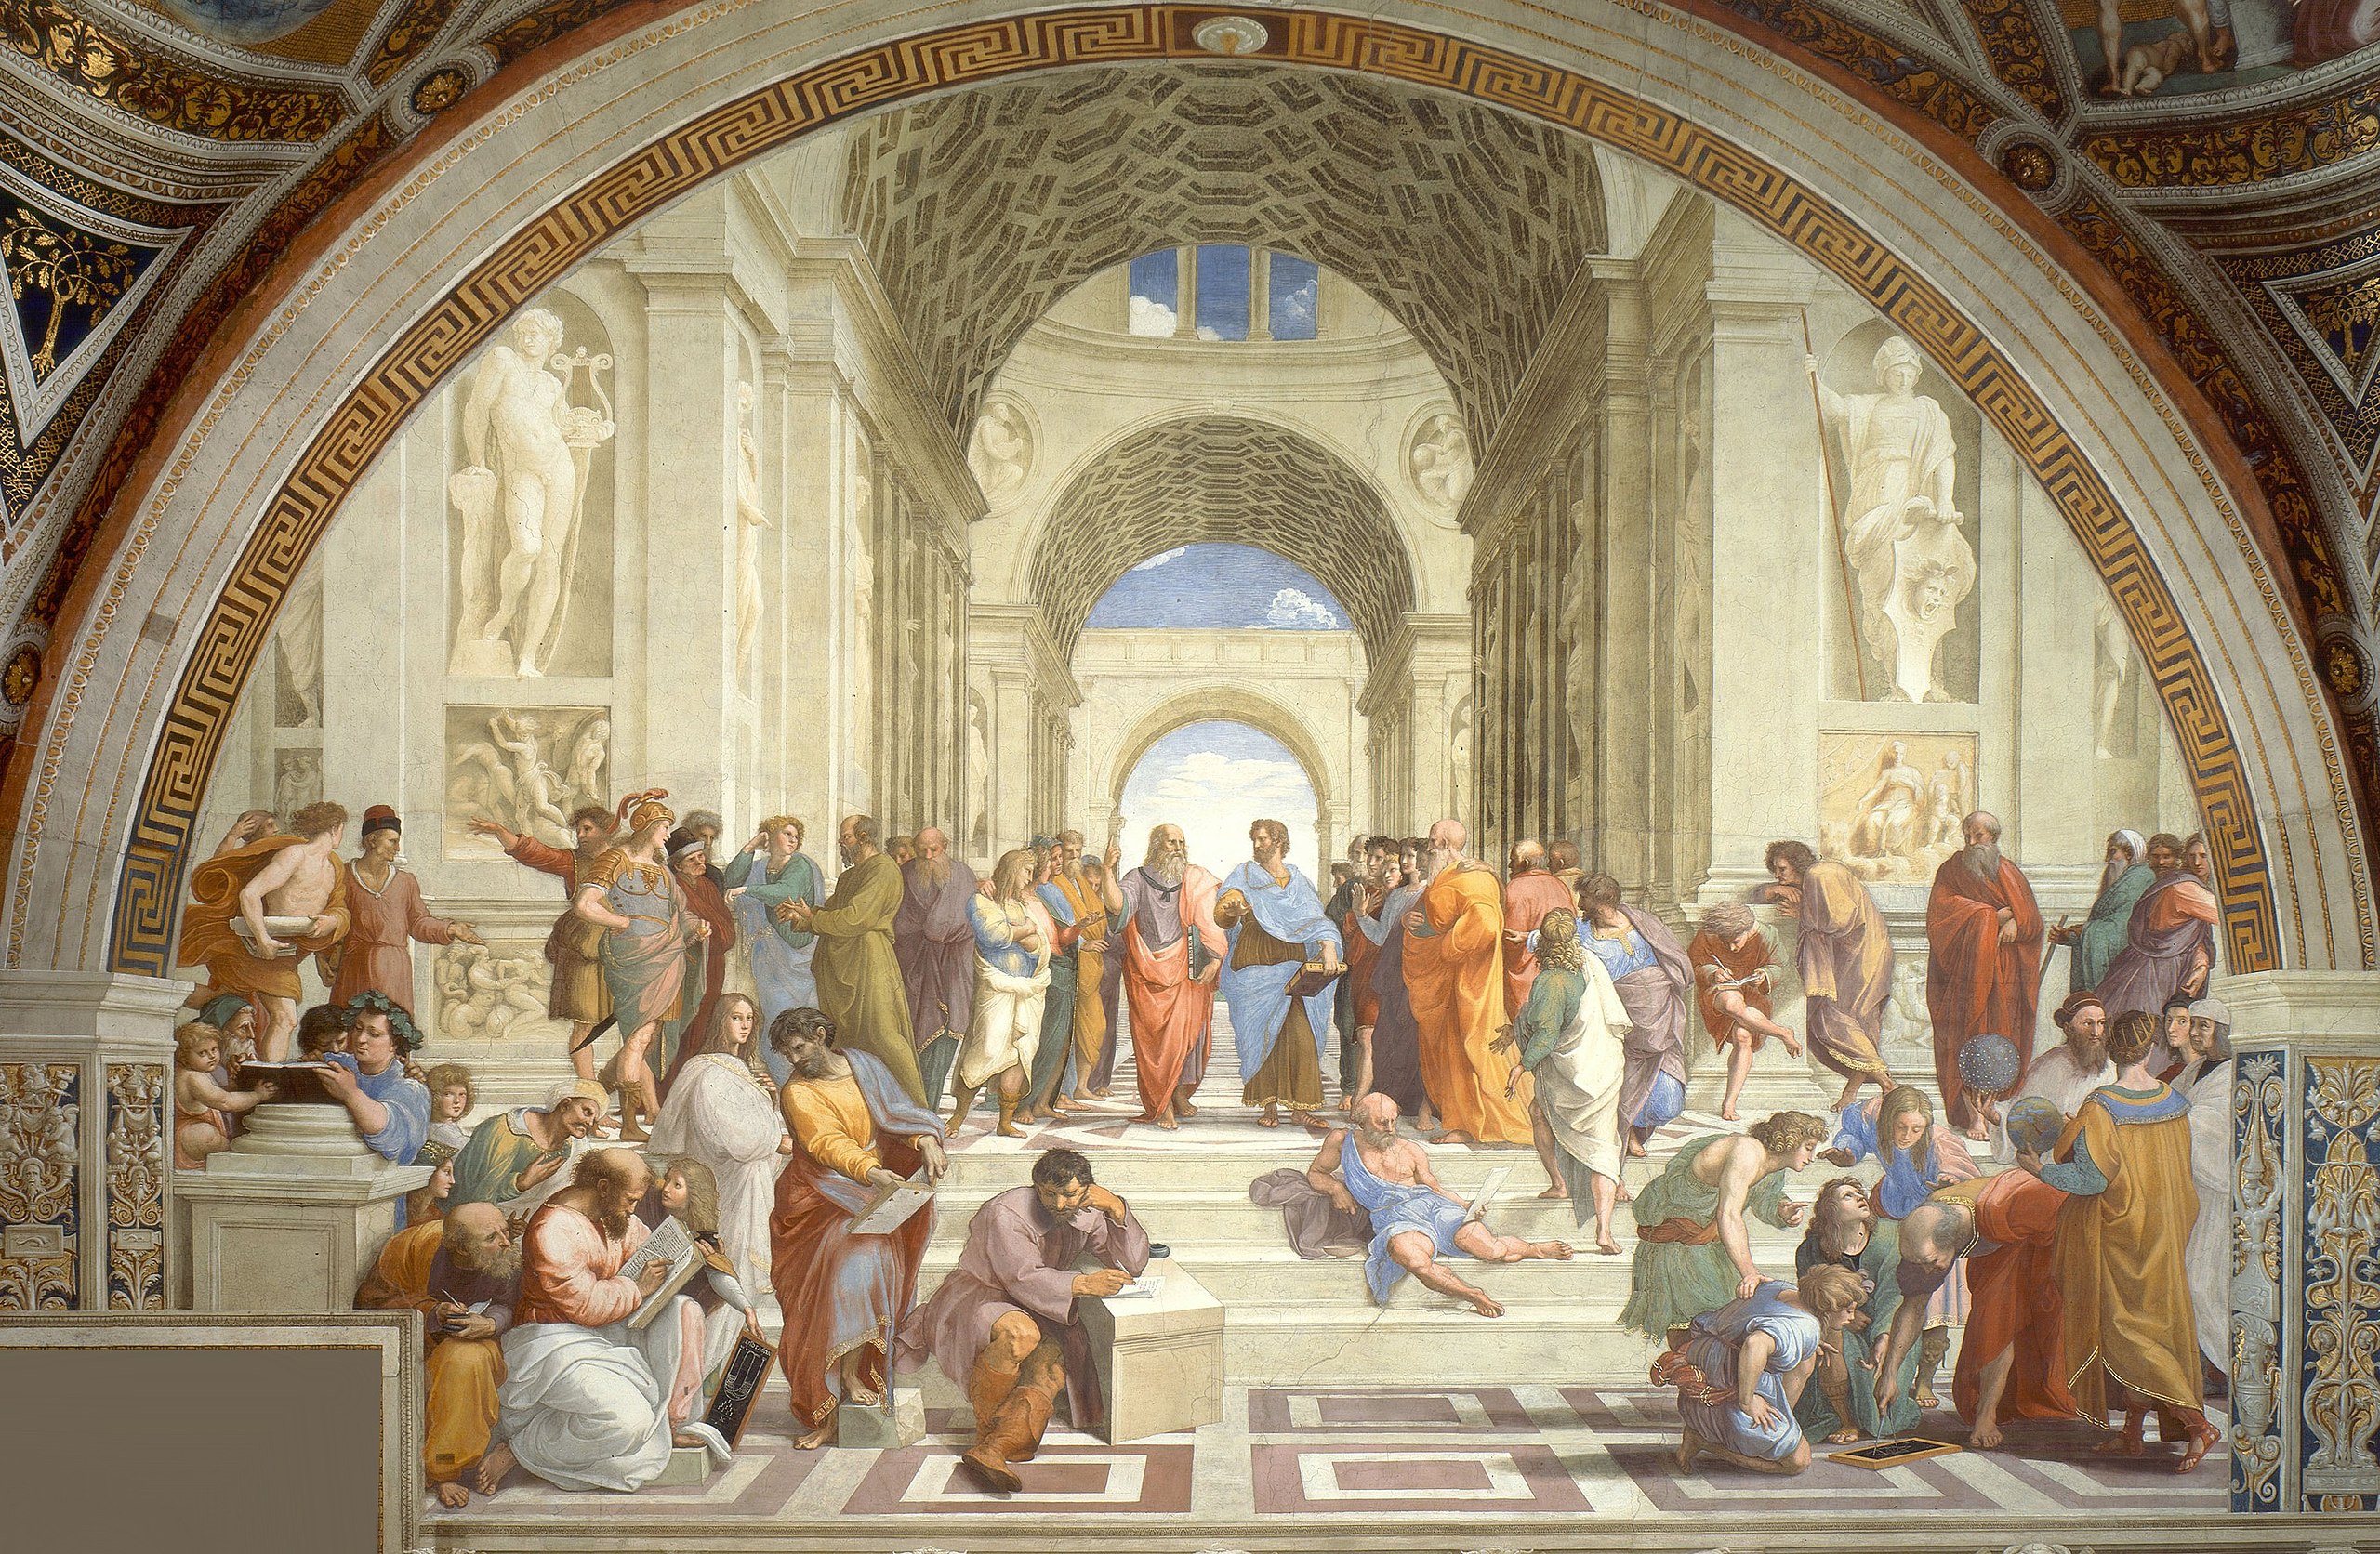 Raphael "The School Of Athens" (1509-1511)